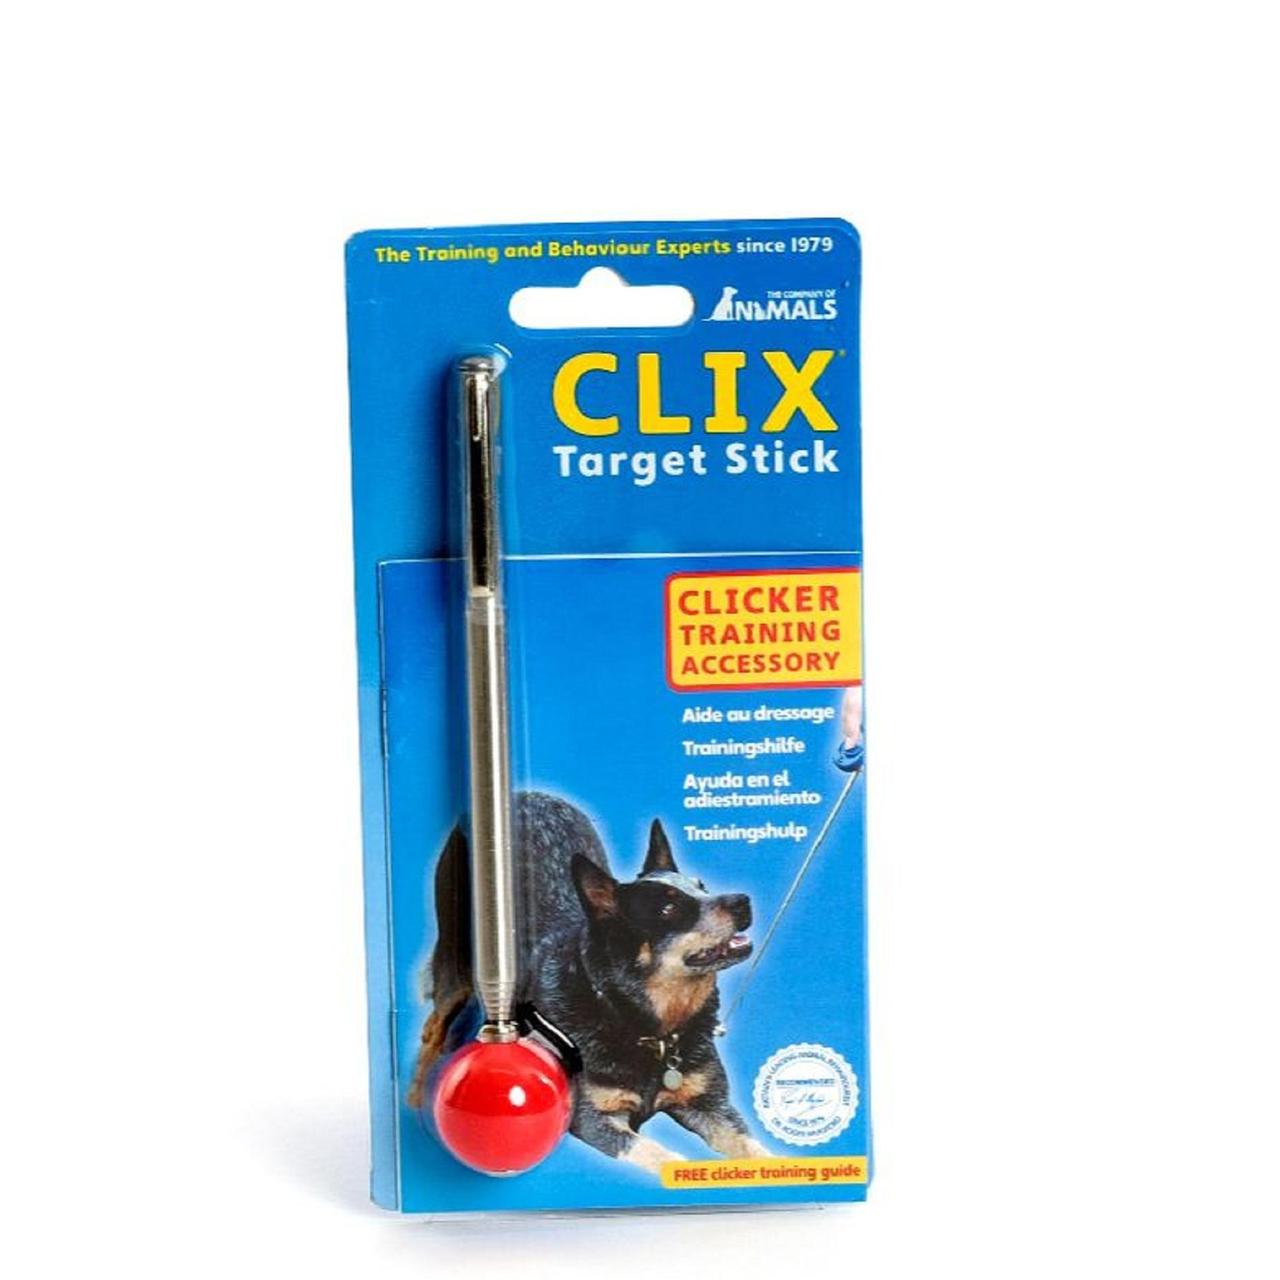 An image of Clix Target Stick